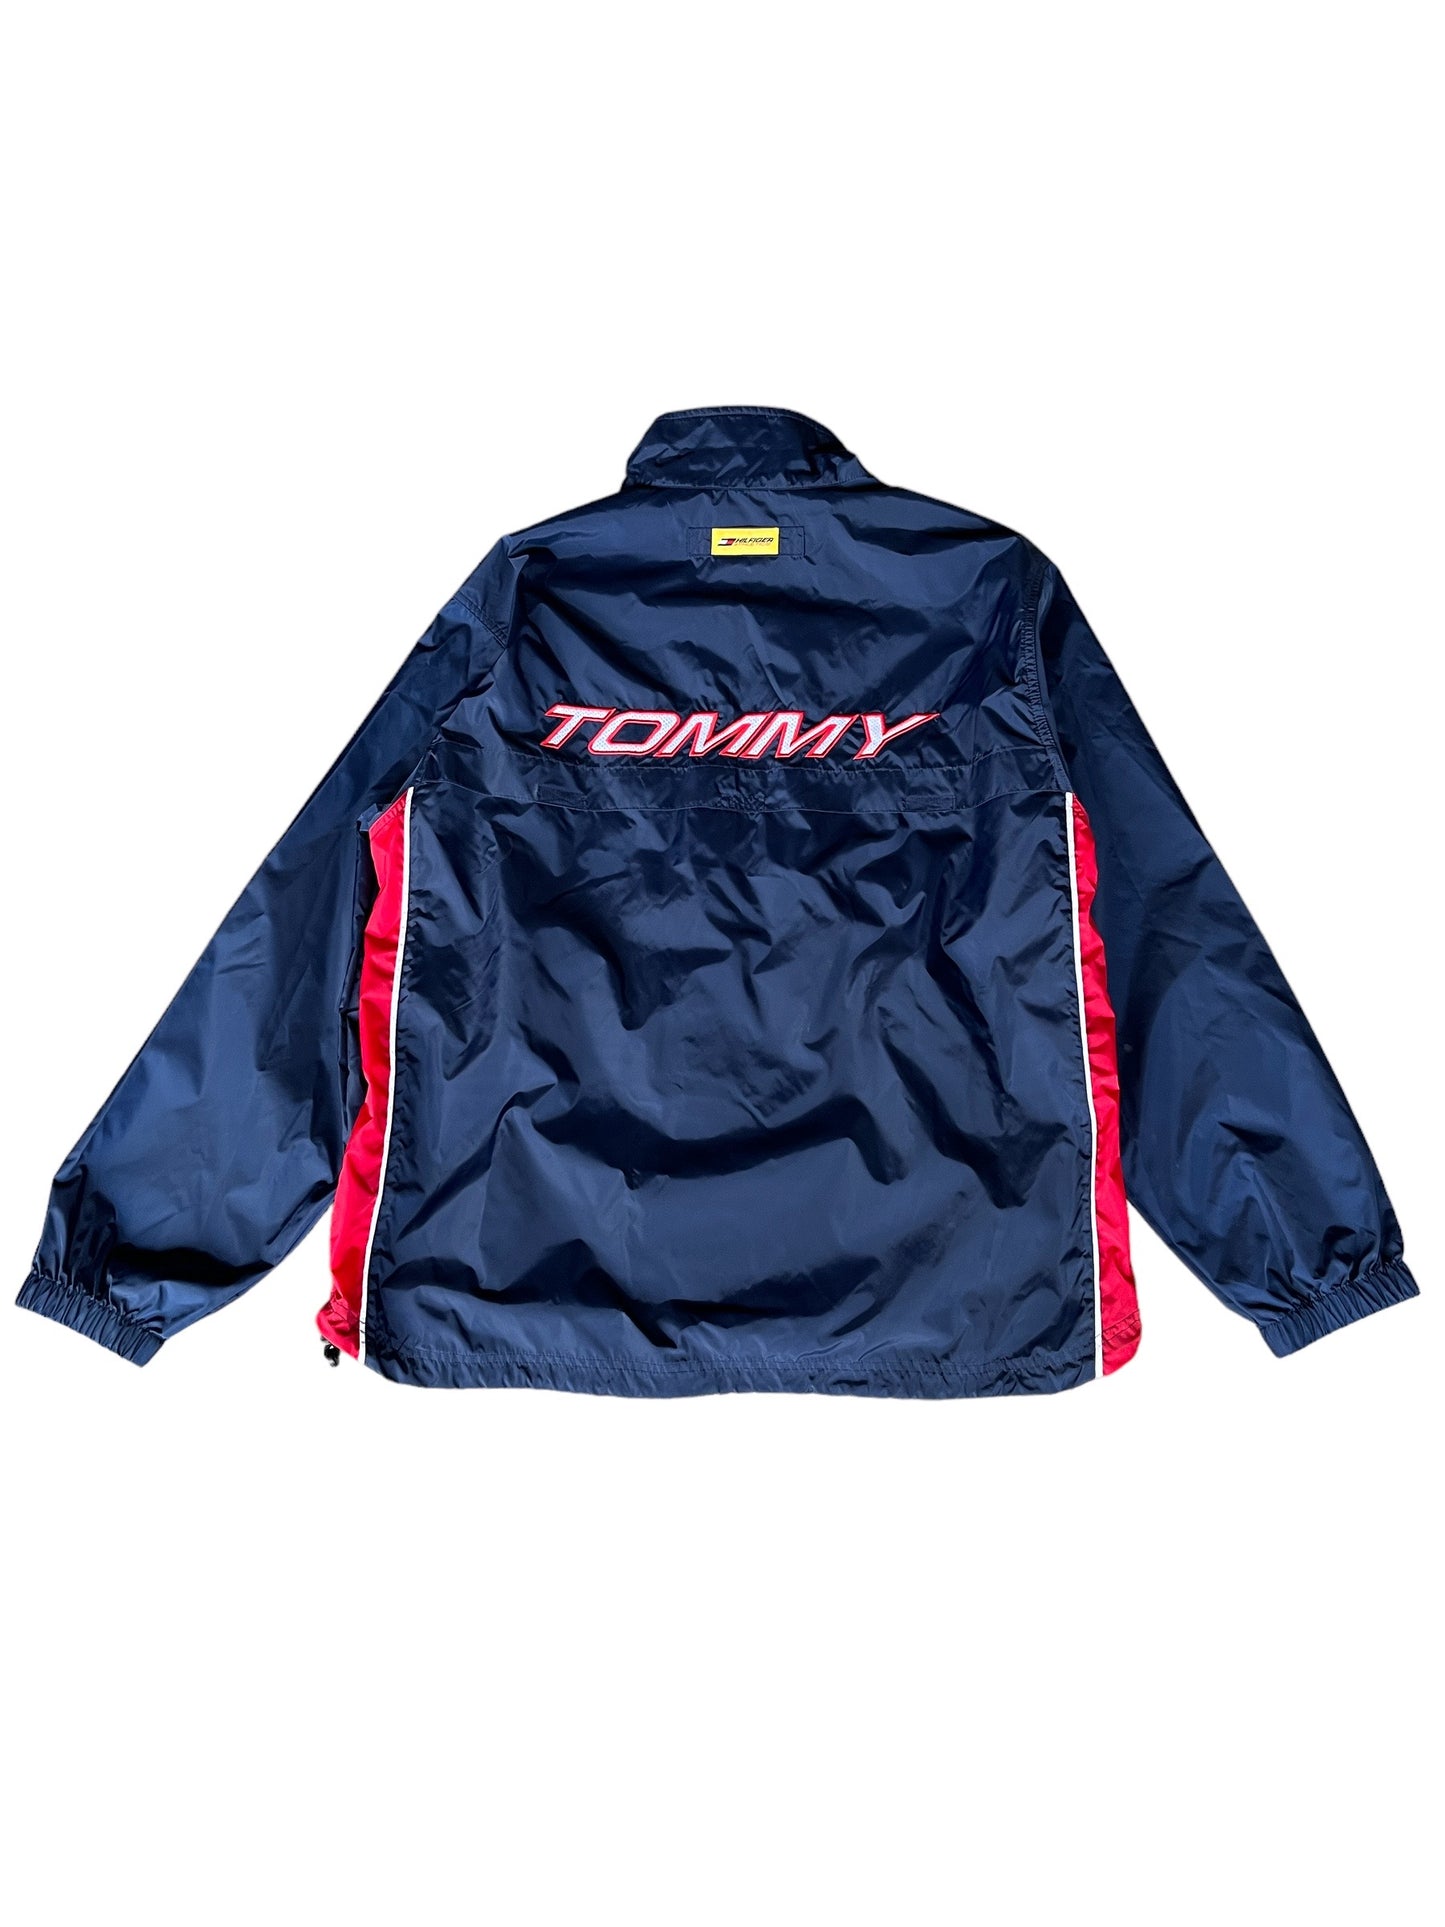 Vintage Tommy Hilfiger Athletics Windbreaker Jacket